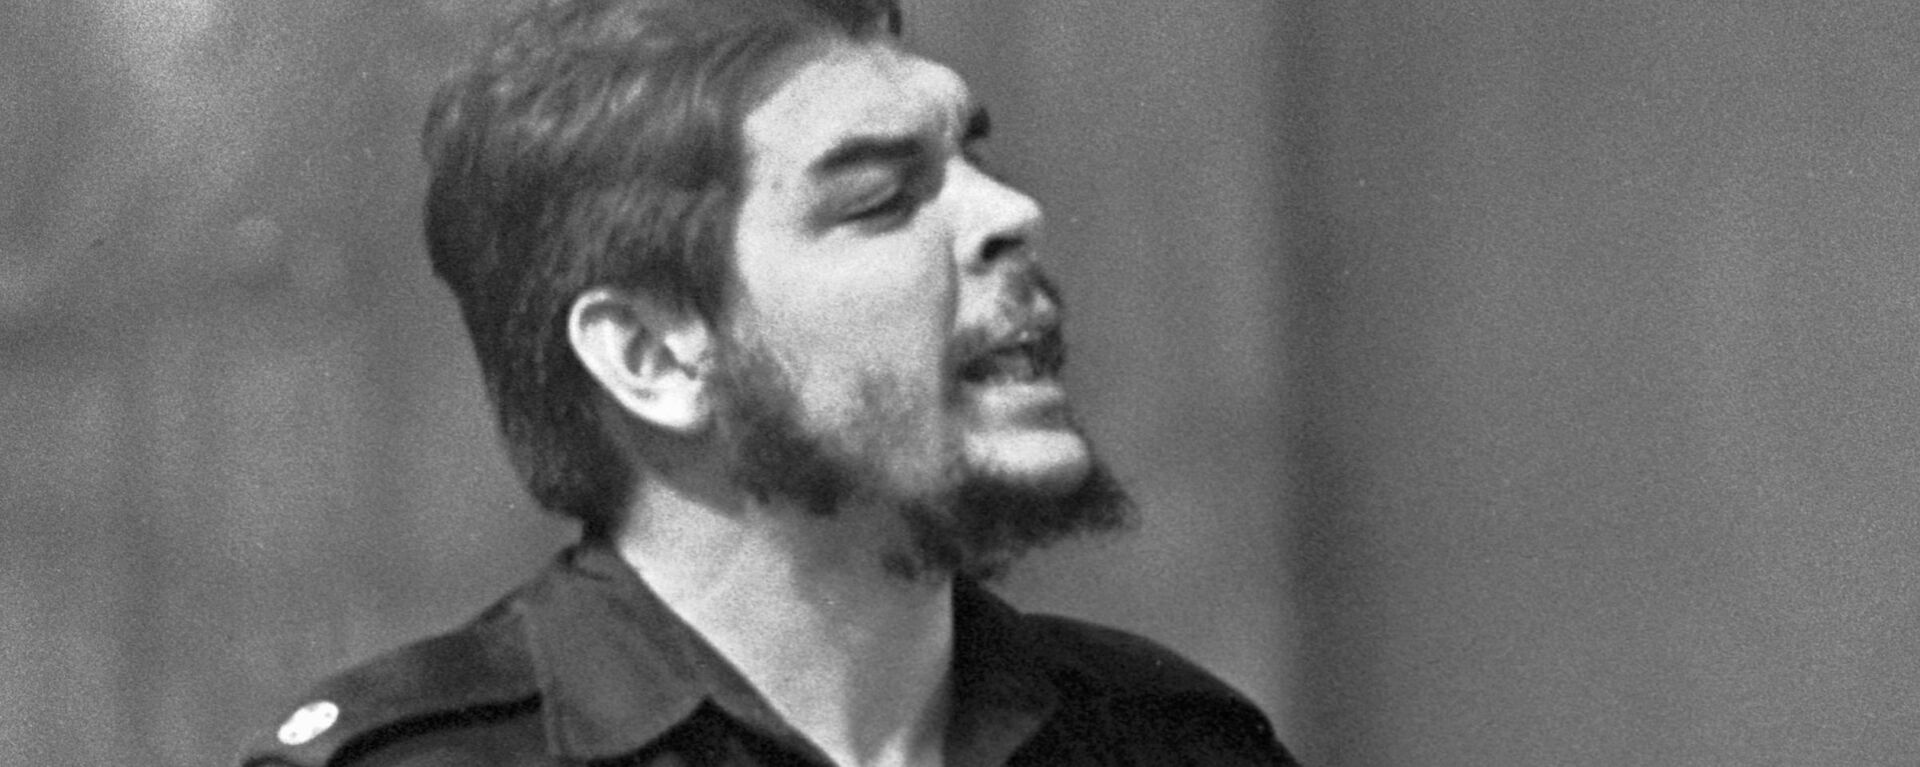 Ernesto 'Che' Guevara, revolucionario cubano-argentino - Sputnik Mundo, 1920, 10.08.2022